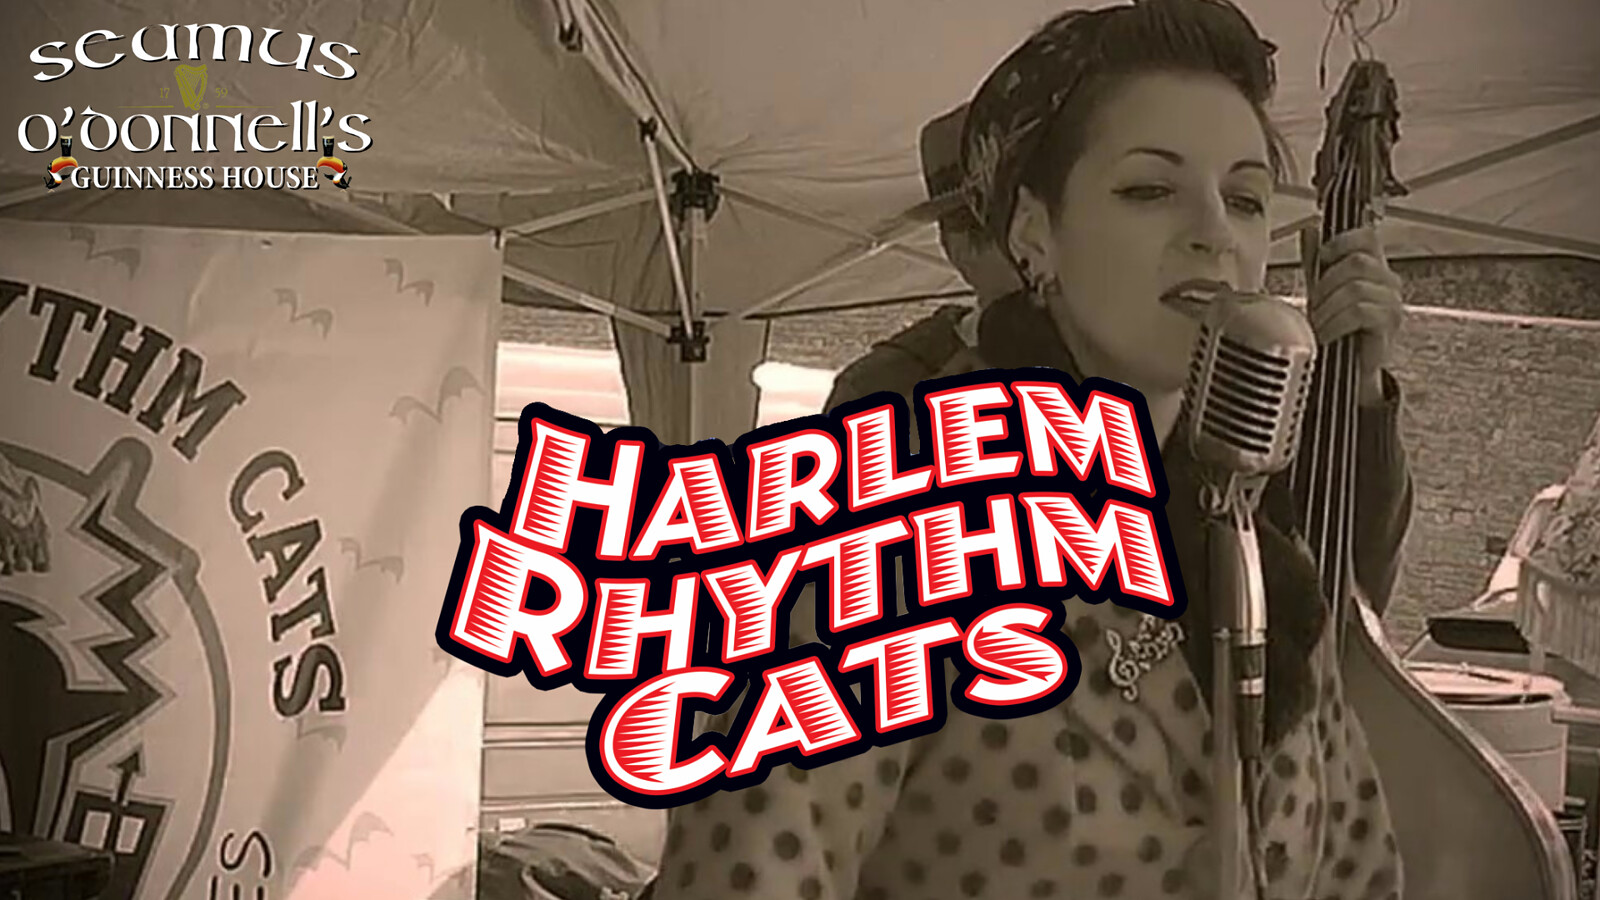 Harlem Rhythm Cats at Seamus O'Donnell's